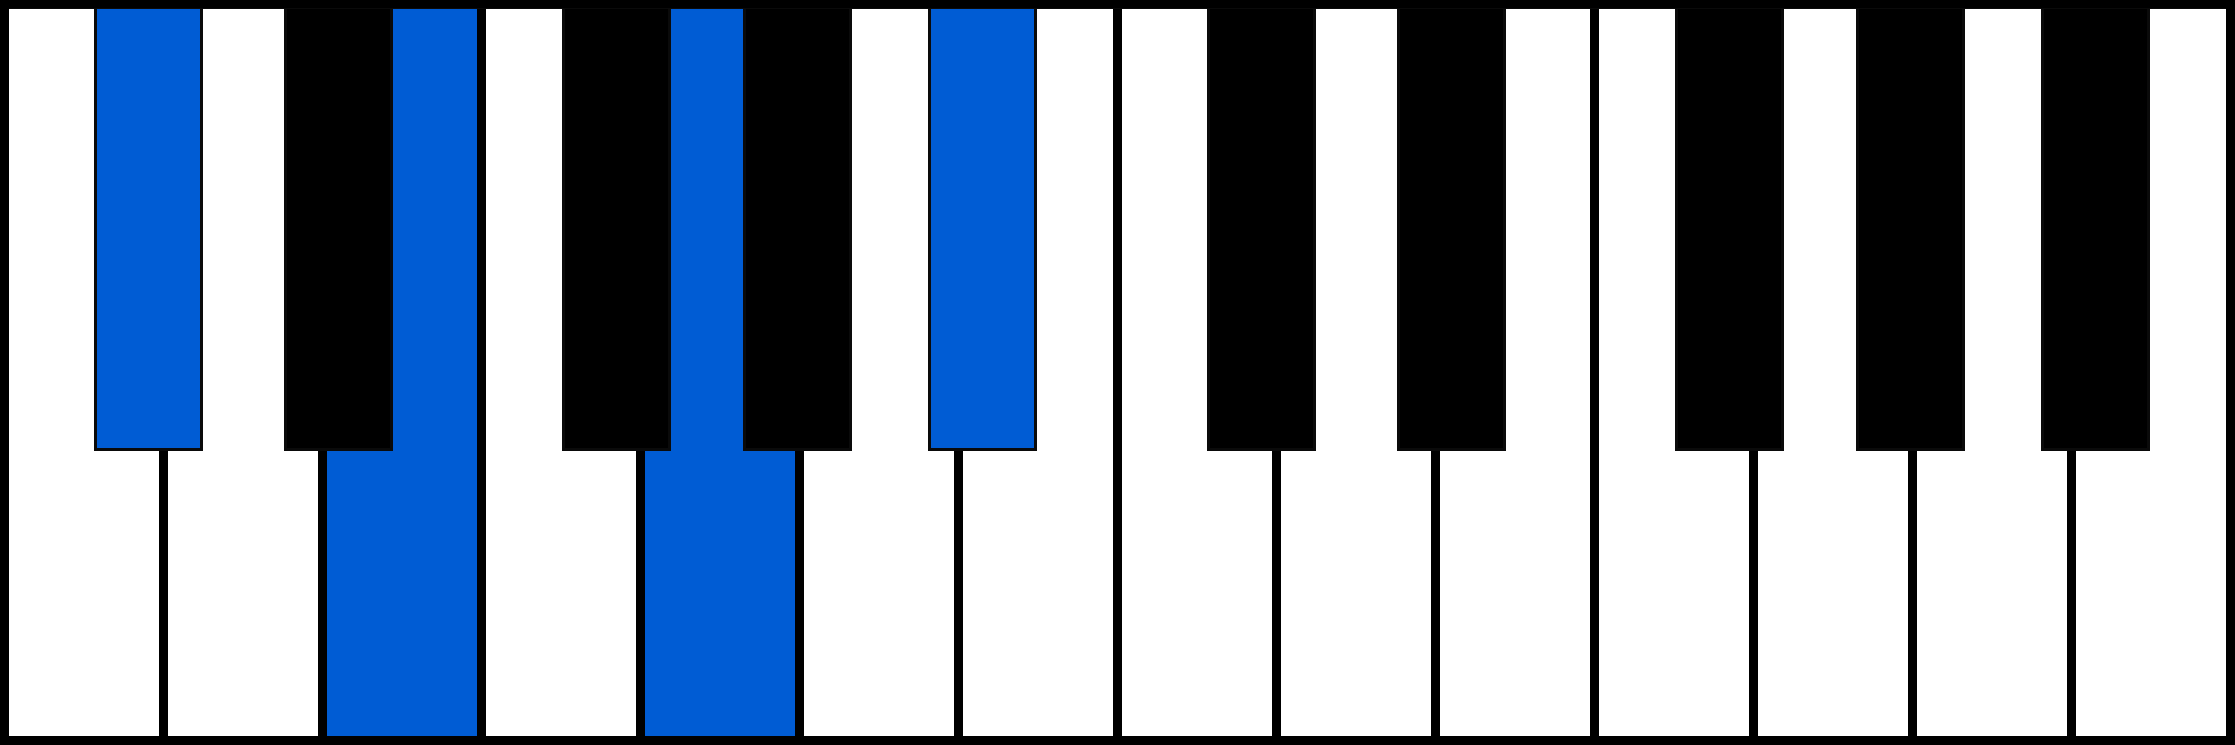 C#dim7 piano chord fingering